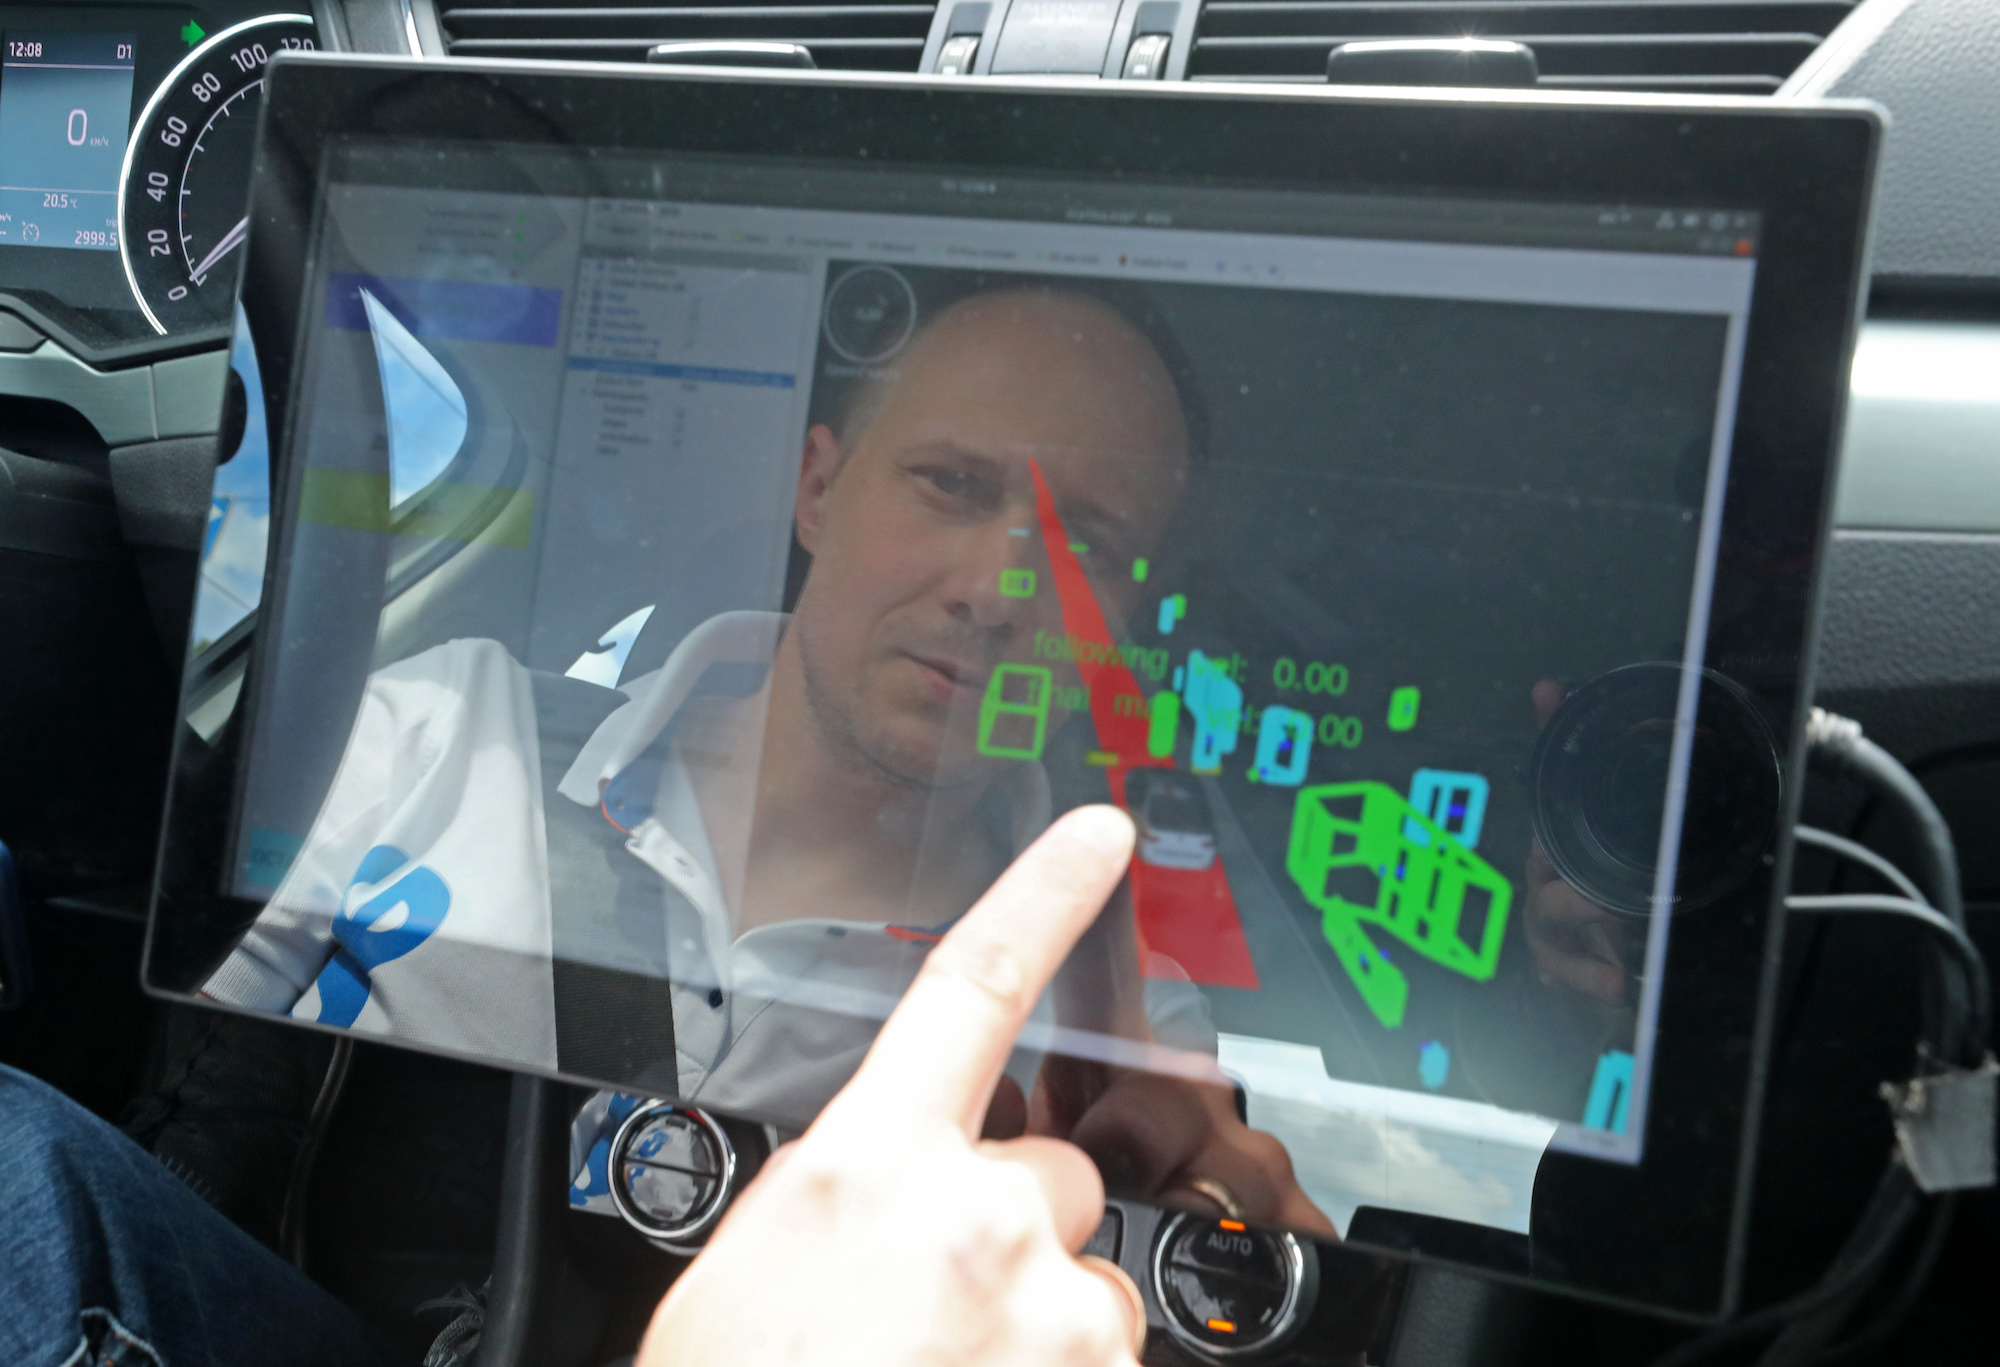 A man's reflection is seen a car touchscreen